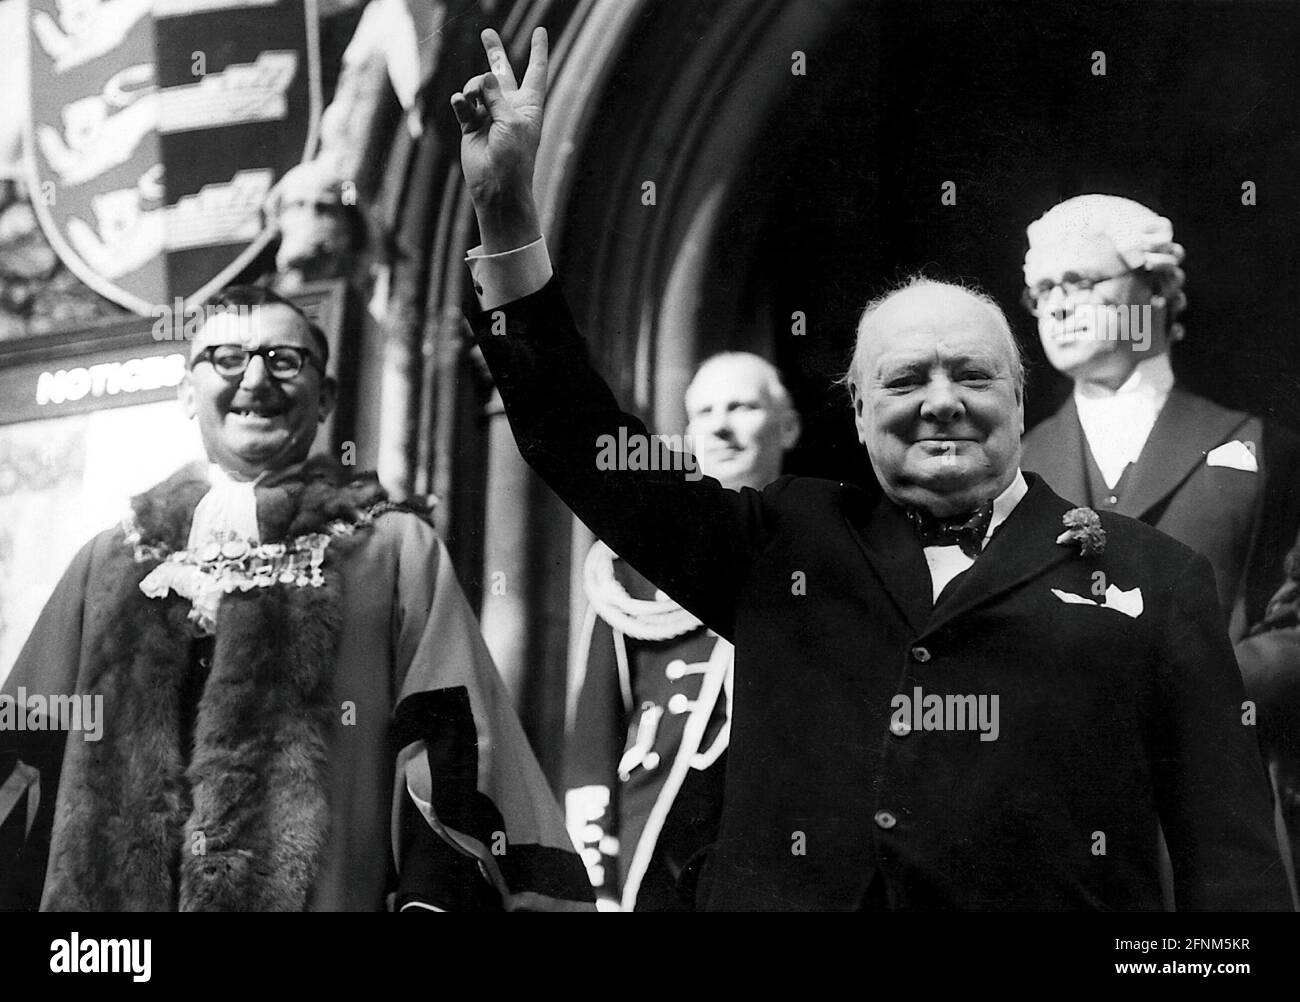 Churchill, Sir Winston 30.11.1874 - 24.1.1965, britischer Politiker, halbe Länge, Dover, 15.8.1951, ADDITIONAL-RIGHTS-CLEARANCE-INFO-NOT-AVAILABLE Stockfoto